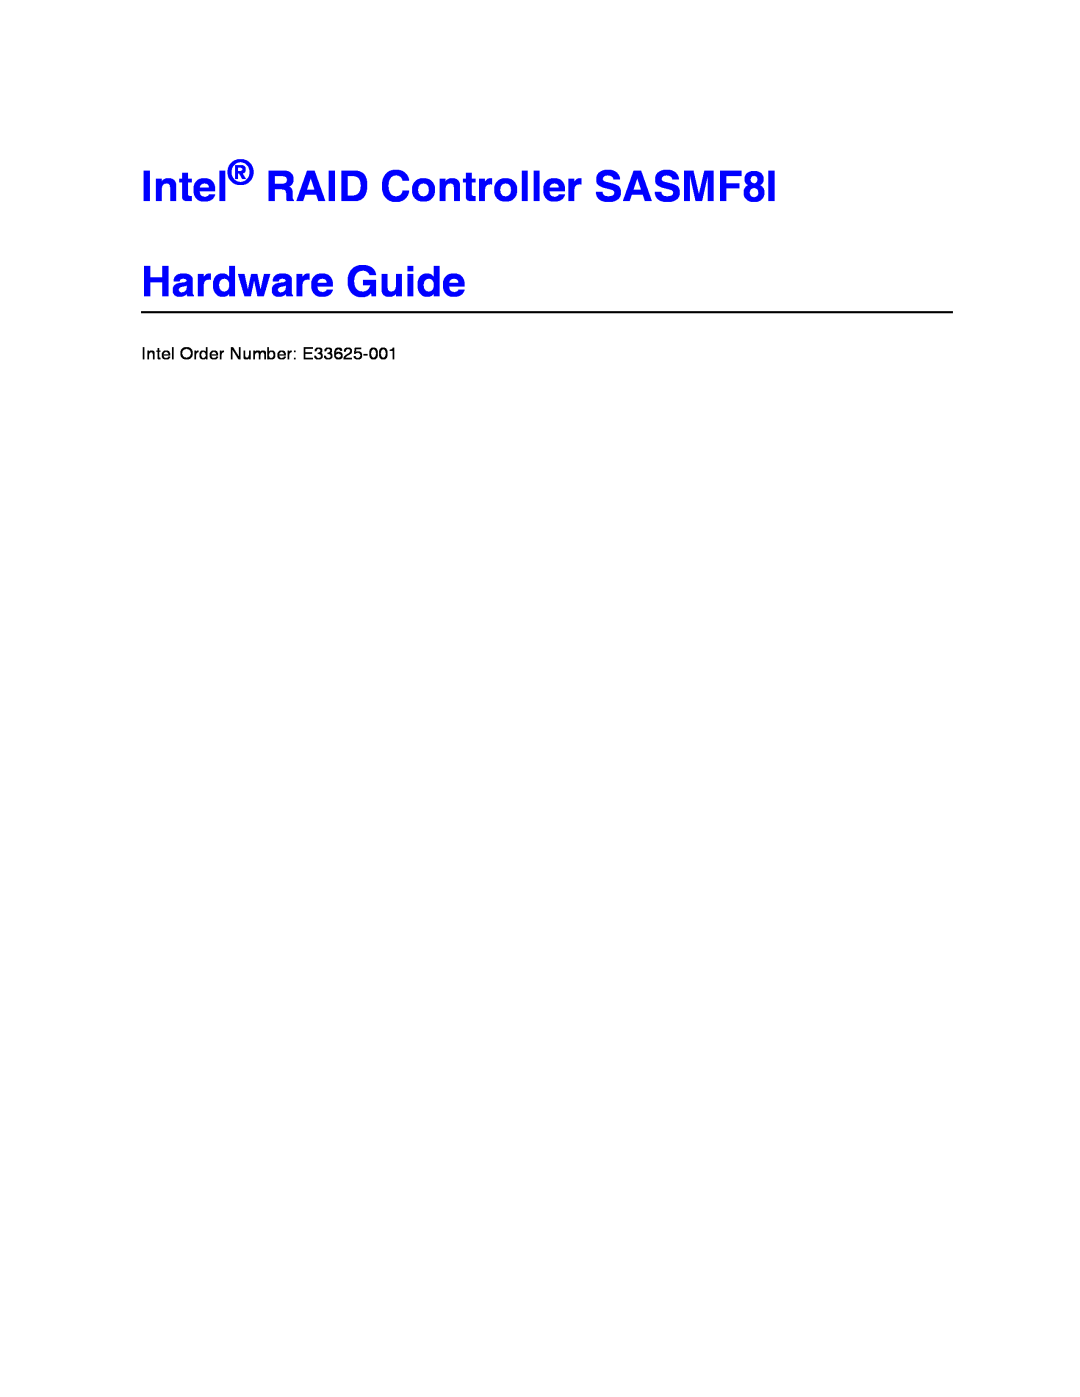 Intel manual Intel RAID Controller SASMF8I Hardware Guide, Intel Order Number E33625-001 